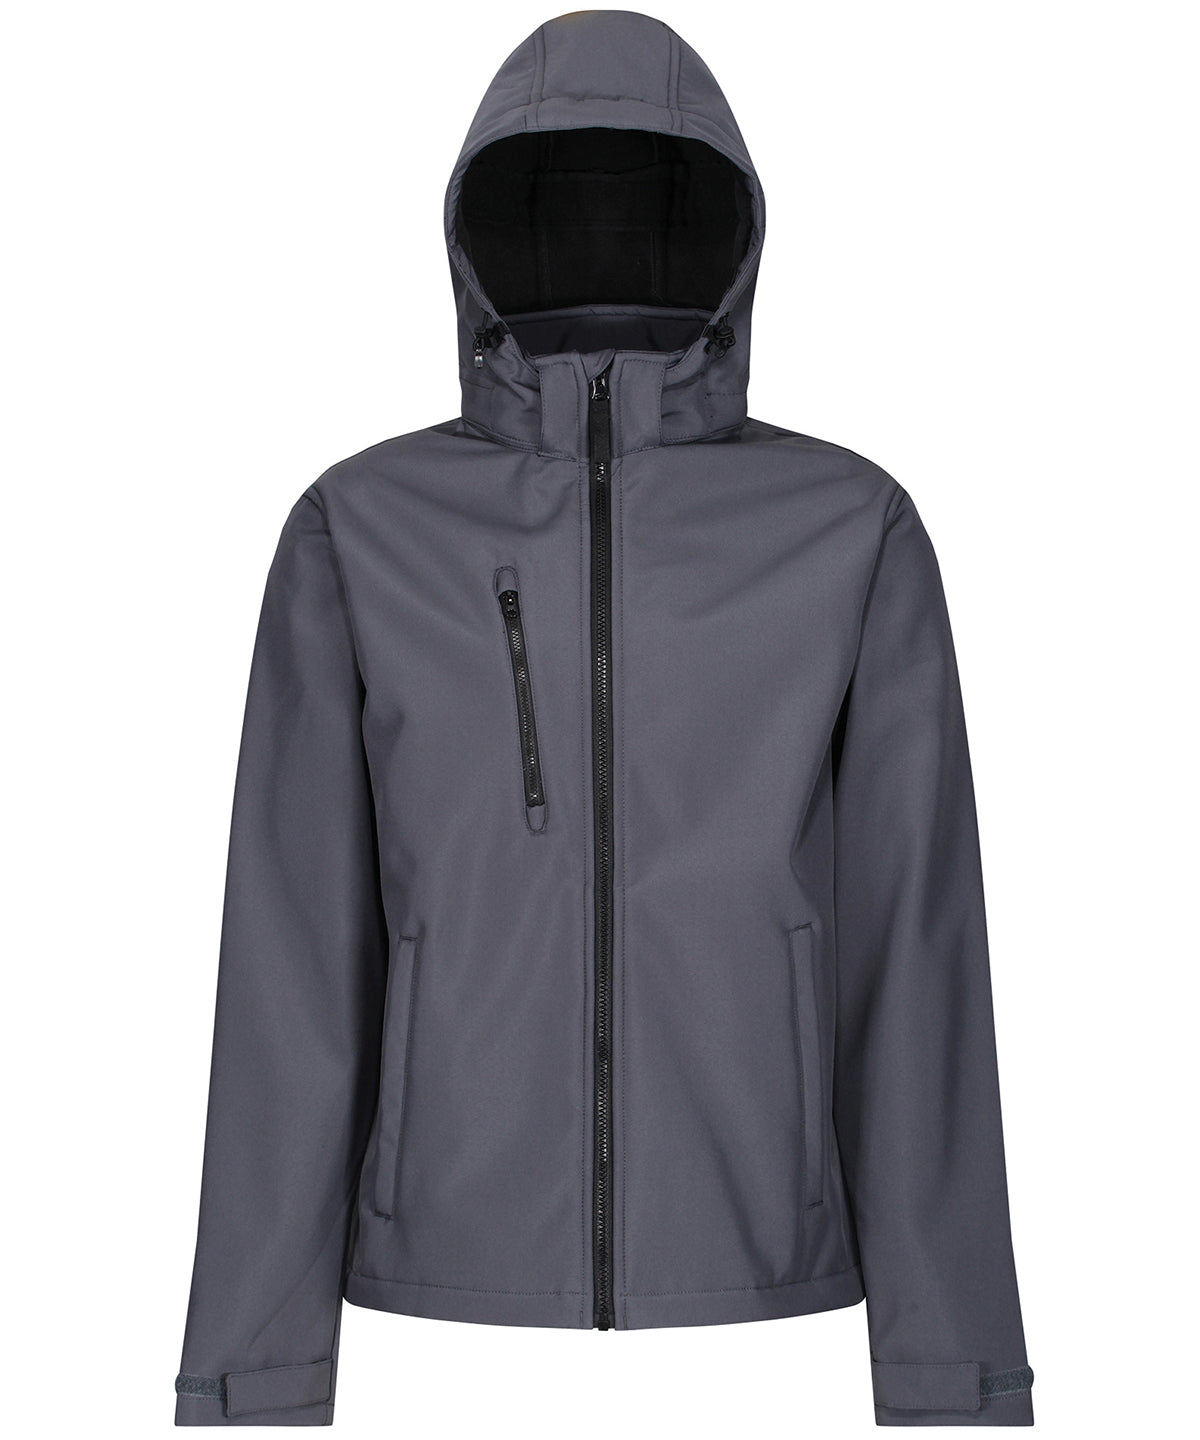 Jakkar - Venturer 3-layer Hooded Softshell Jacket